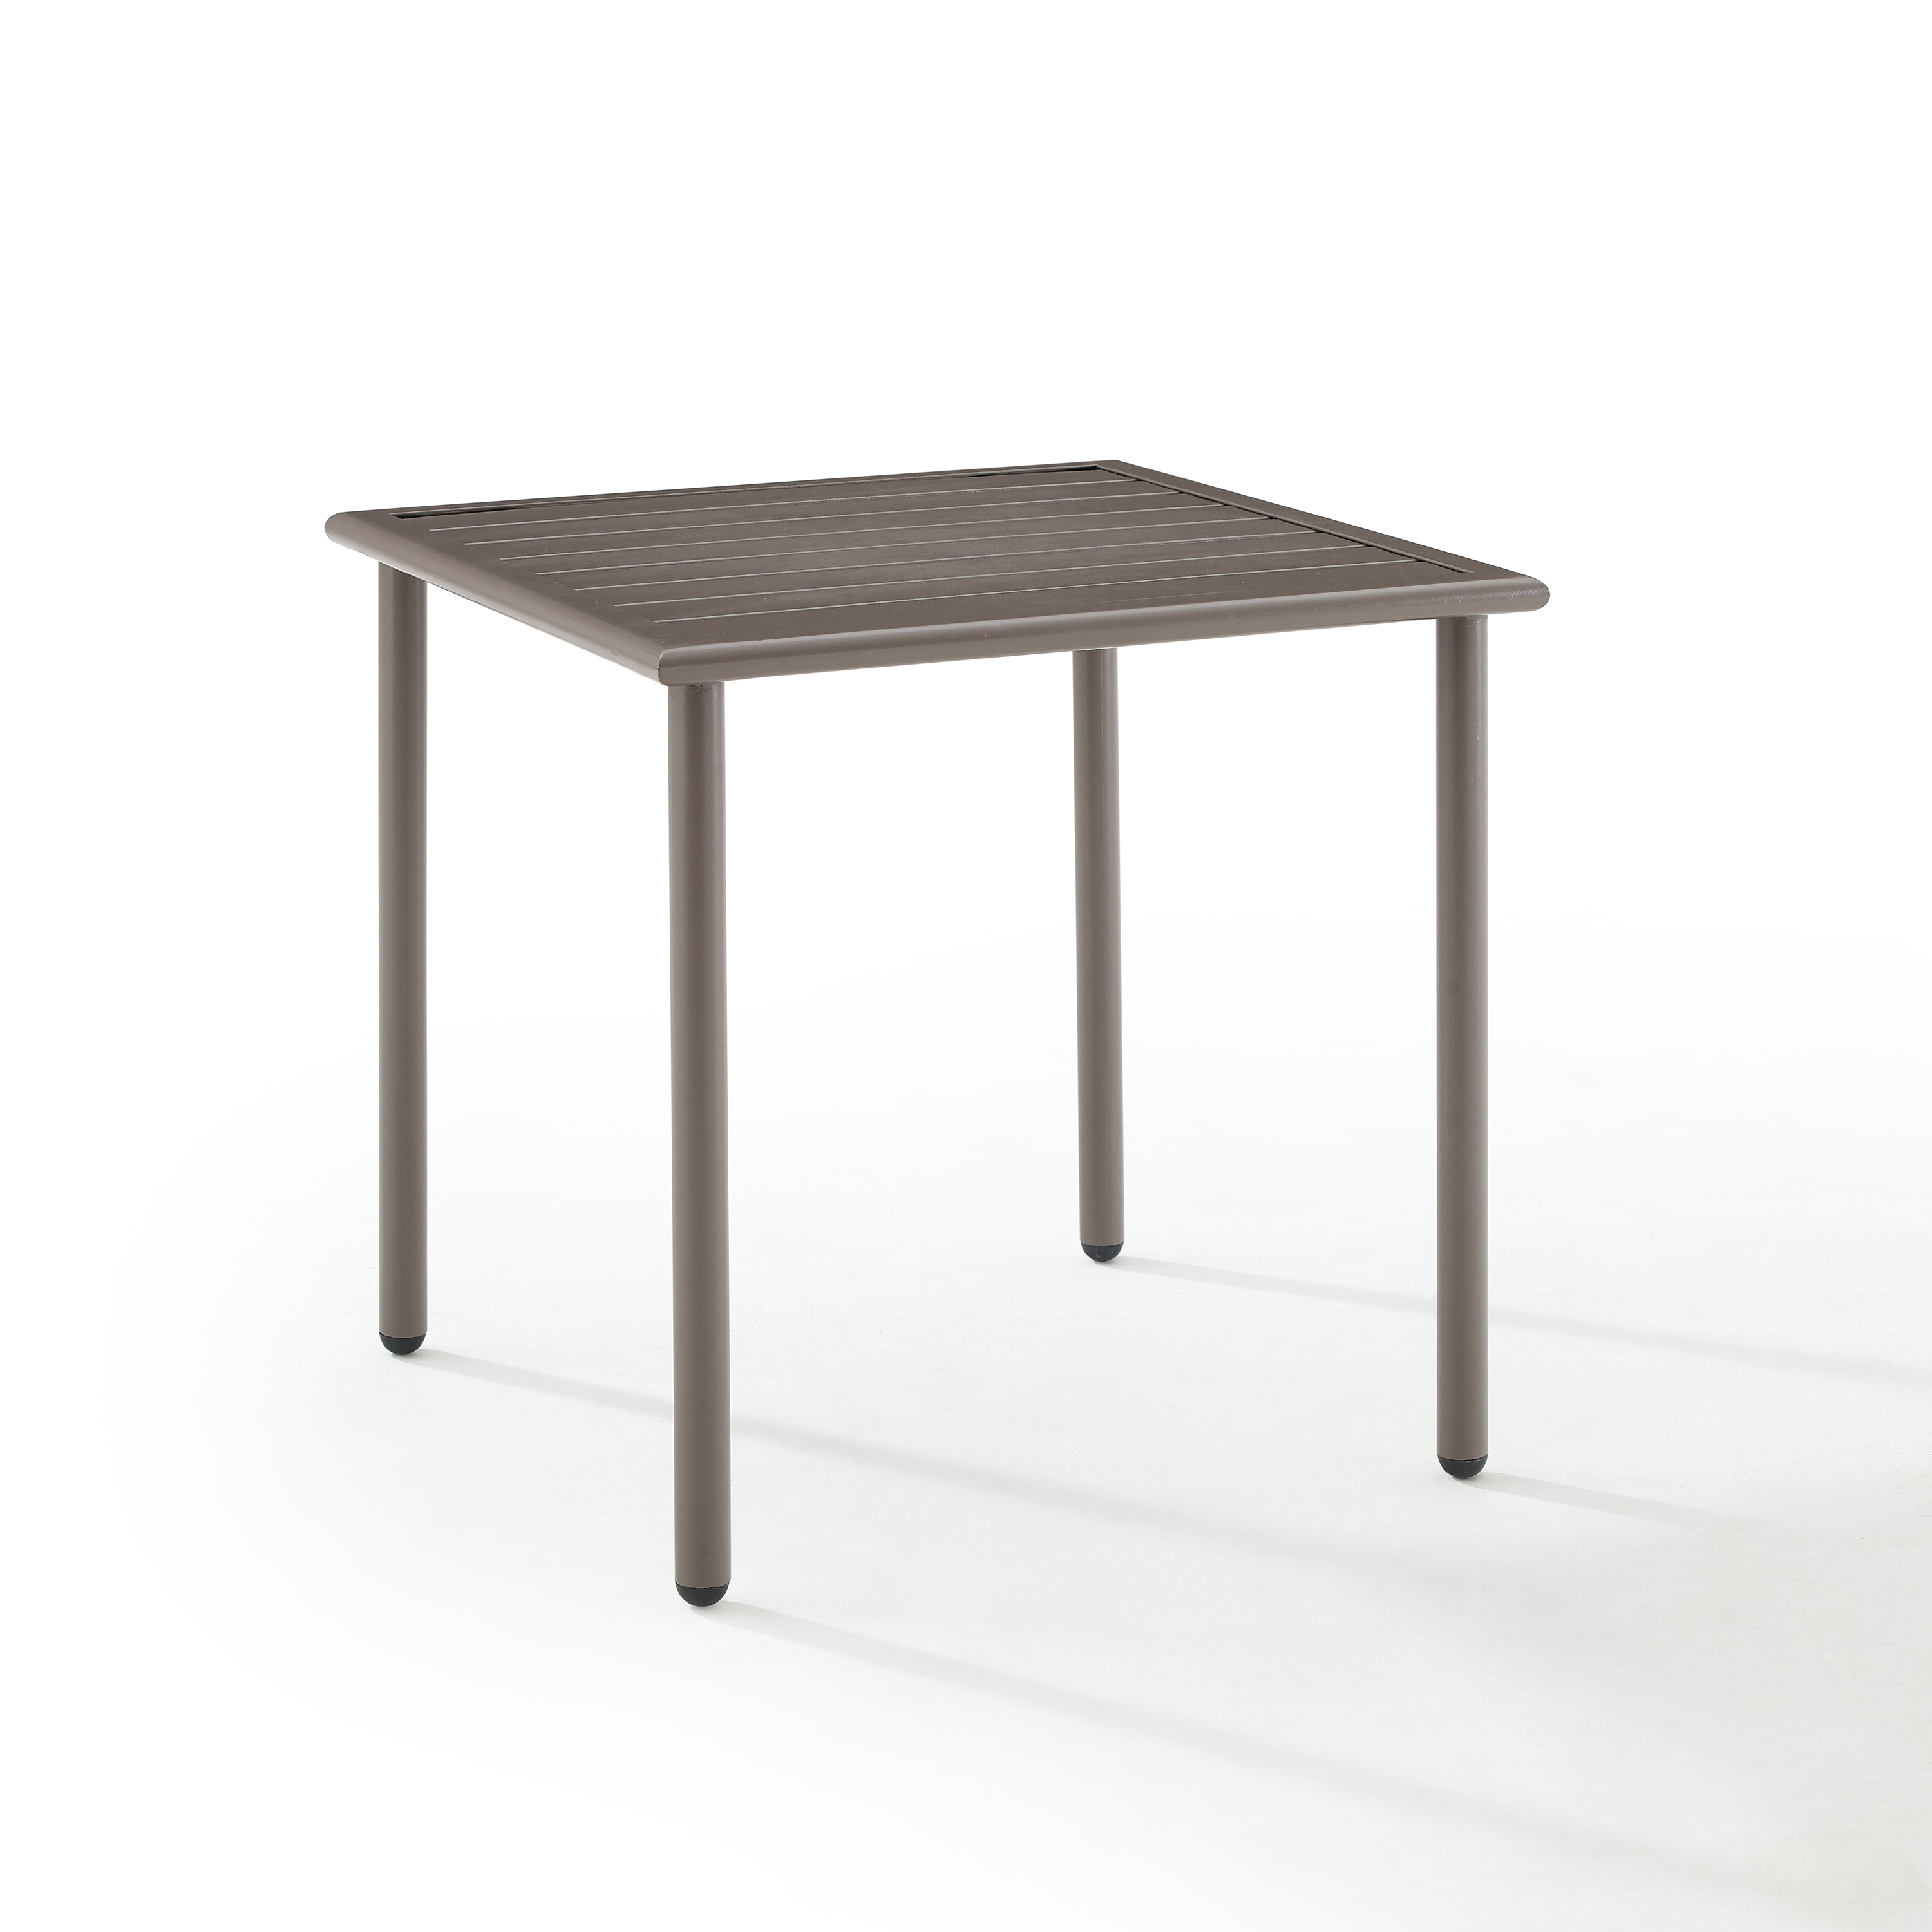 Crosley Furniture Cali Bay Modern Metal Outdoor Side Table in Light Brown - image 1 of 6